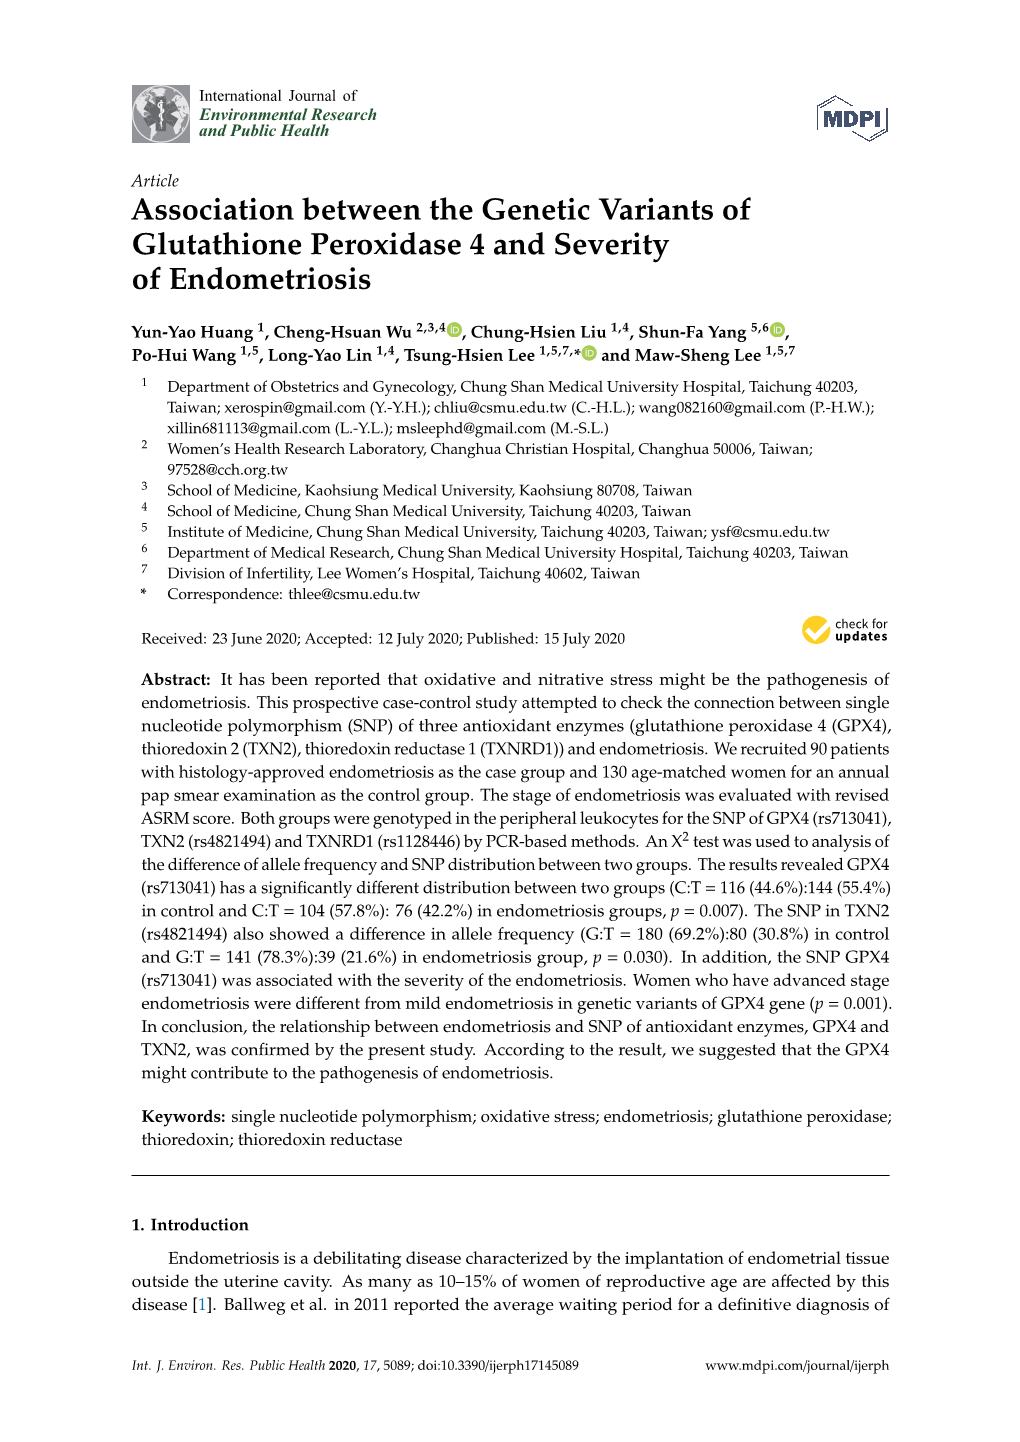 Association Between the Genetic Variants of Glutathione Peroxidase 4 and Severity of Endometriosis